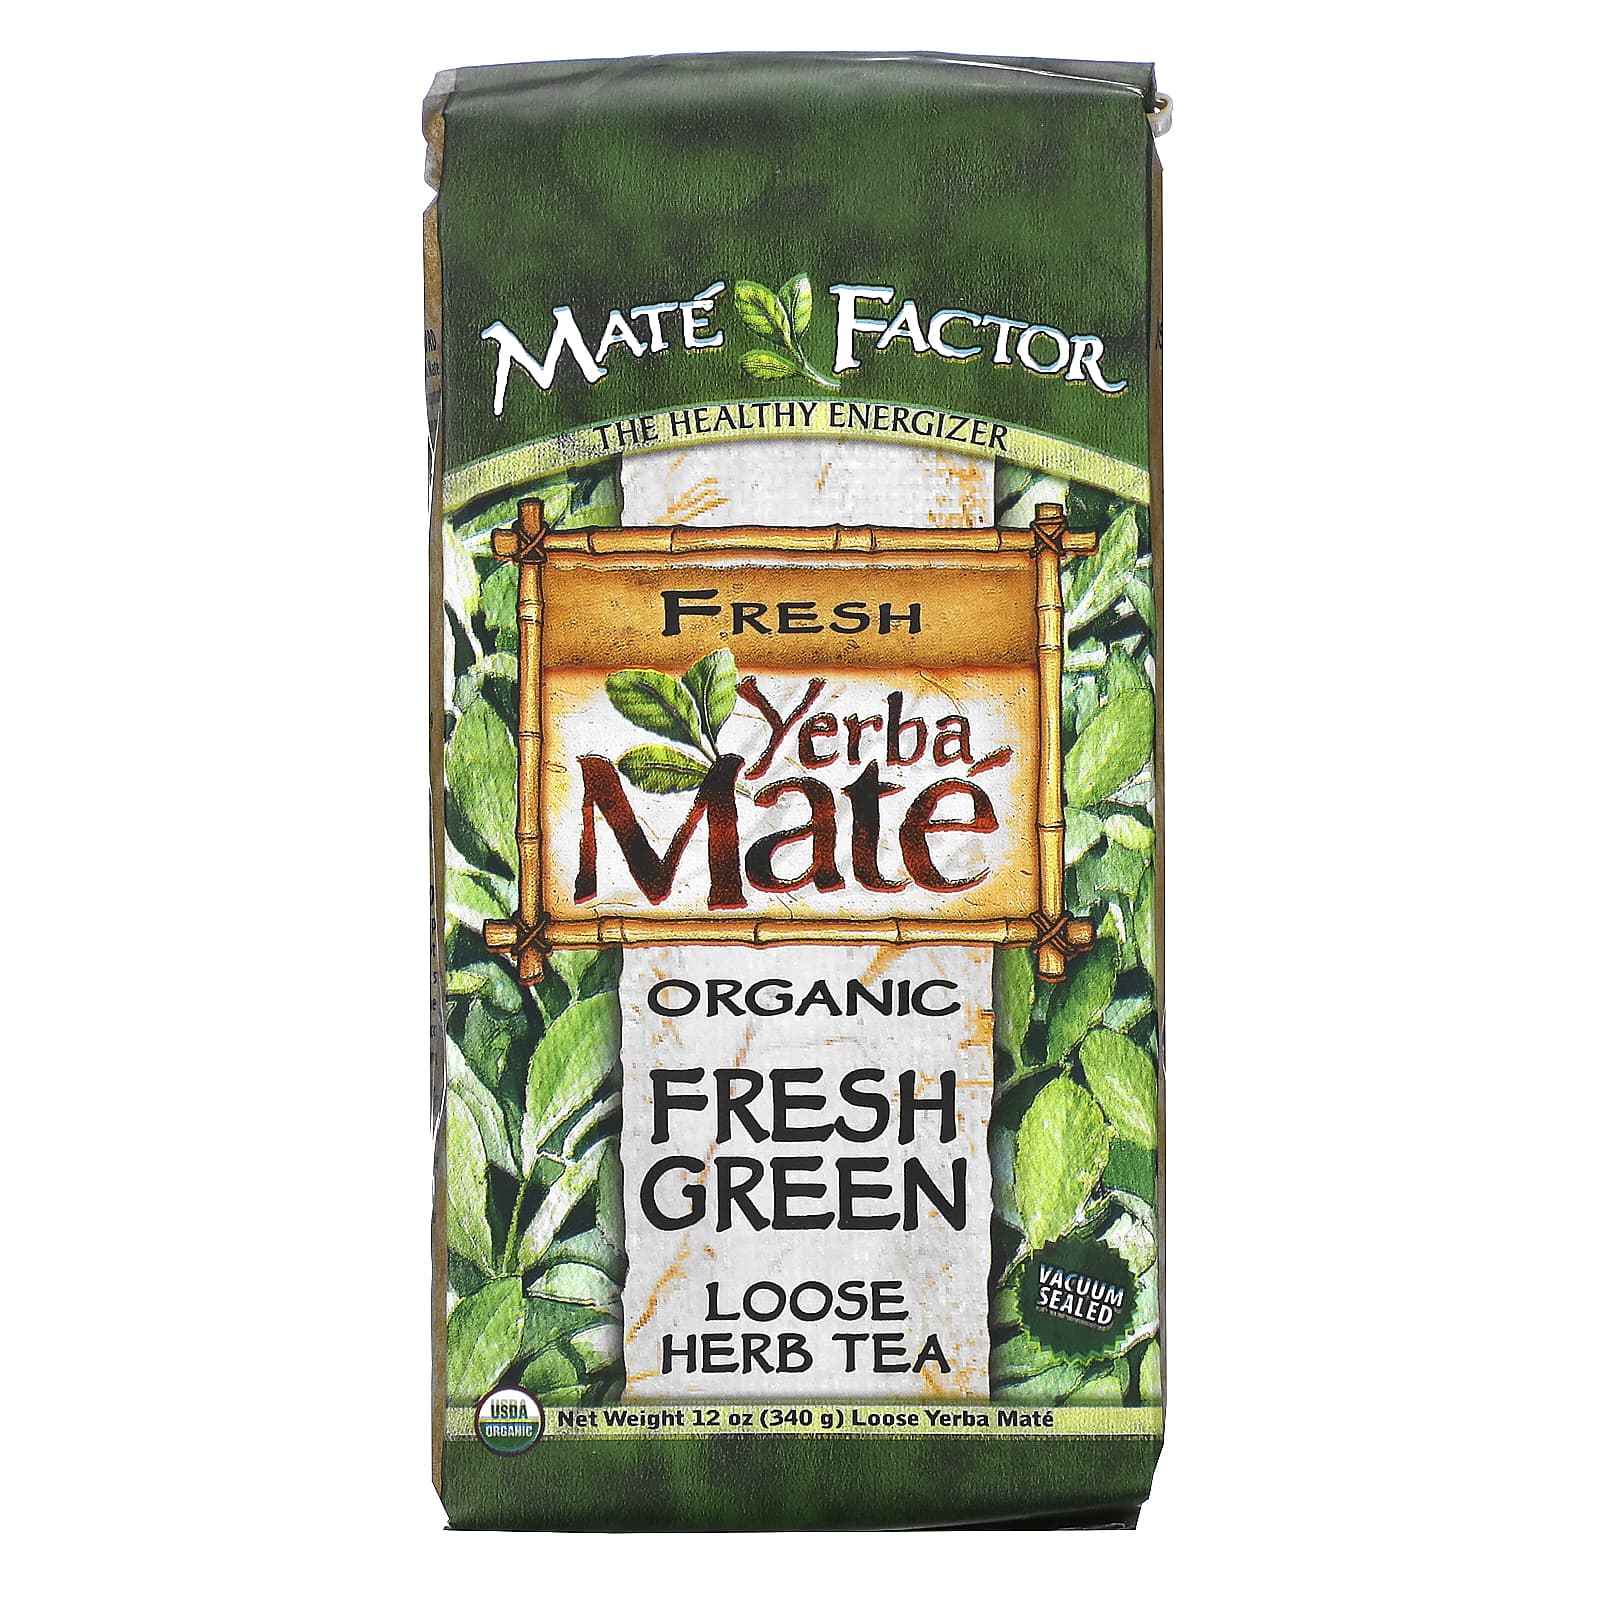 dwaas Kust Bangladesh Mate Factor, Organic Yerba Mate, Fresh Green, Loose Herb Tea, 12 oz (340 g)